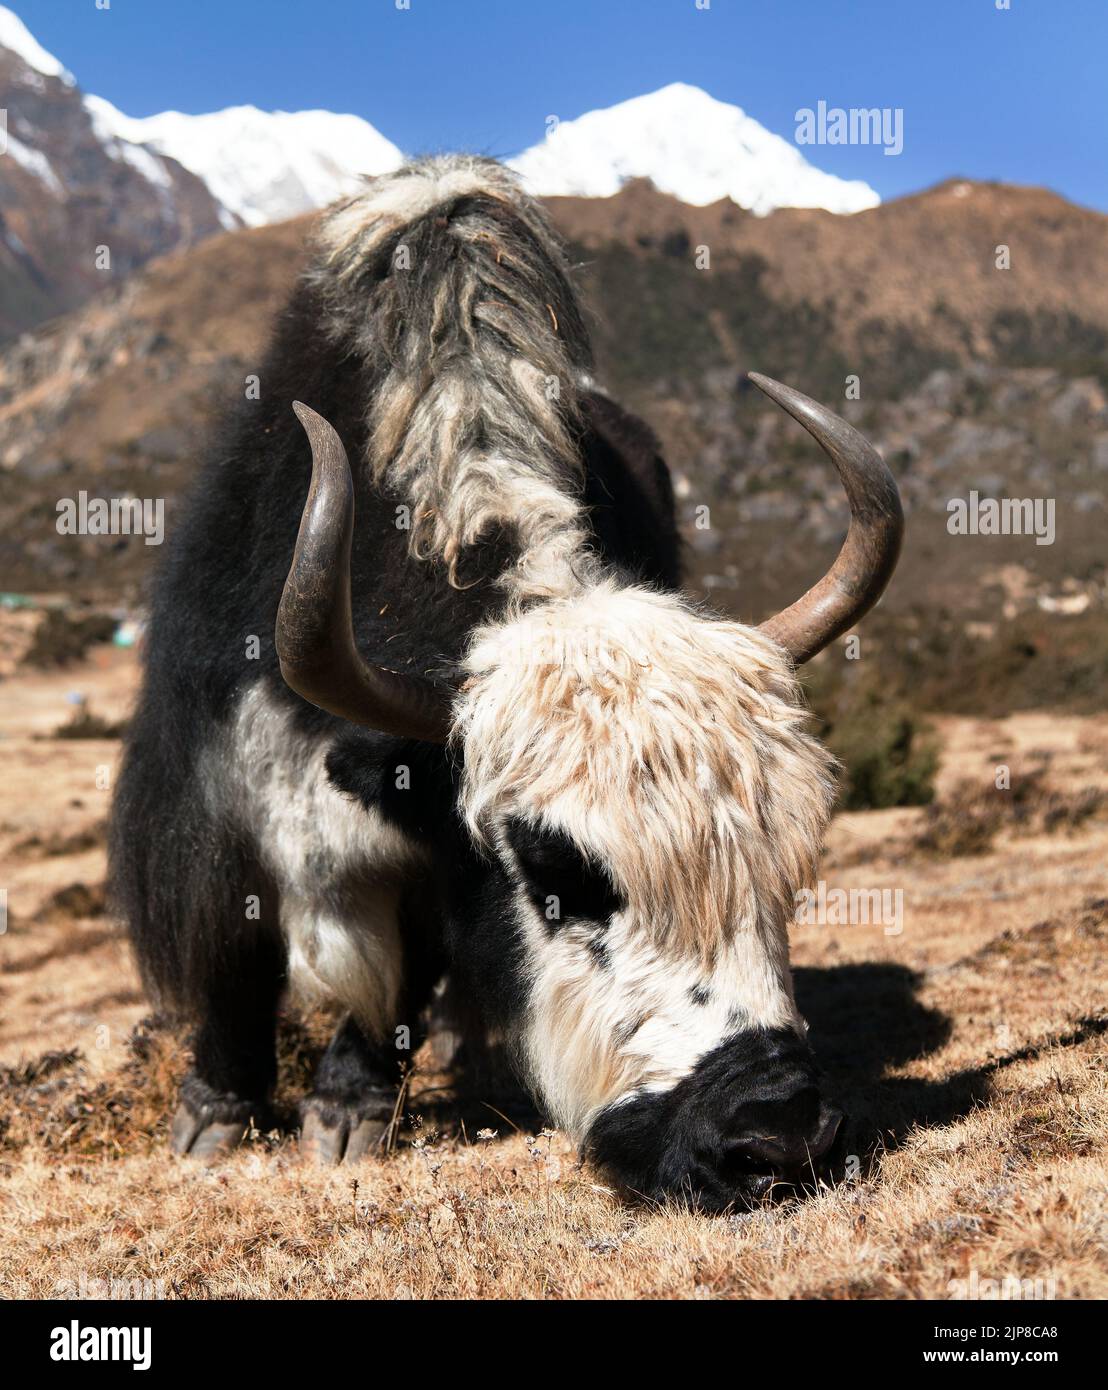 Black and white yak on the way to Everest base camp - Nepal Stock Photo